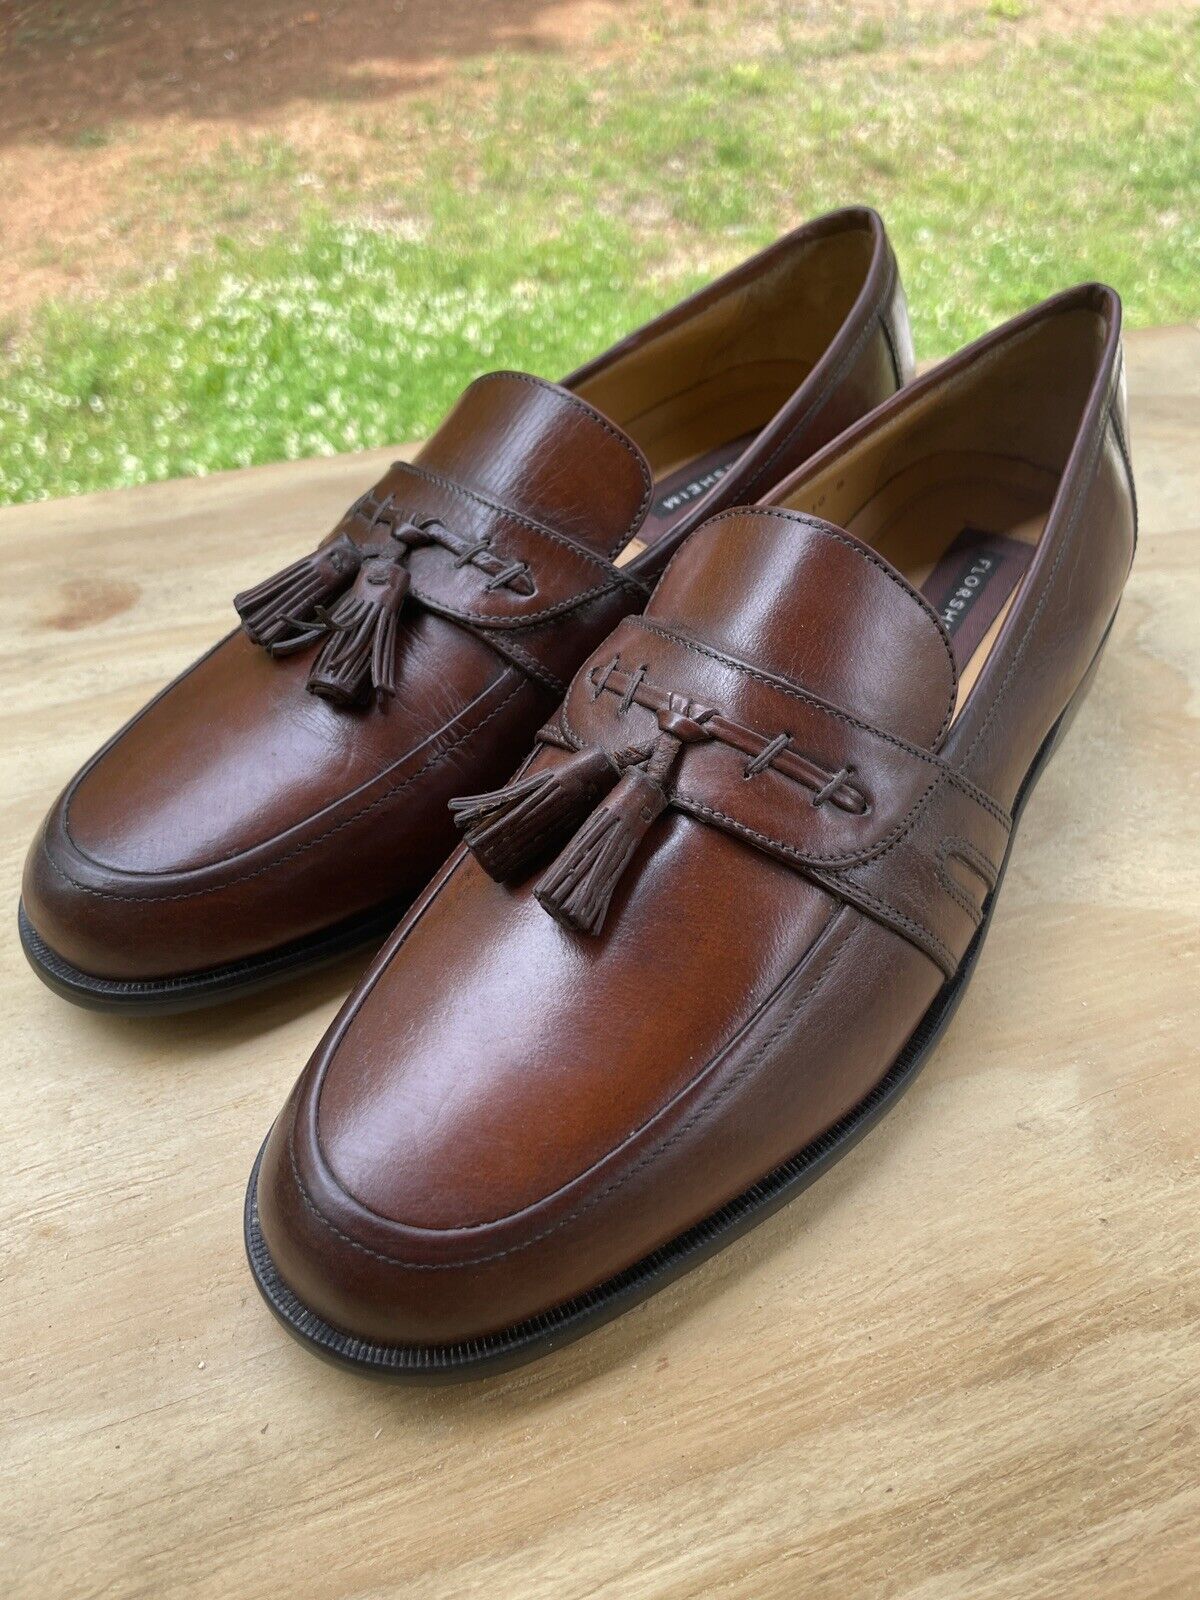 florsheim Men’s Tassel loafers Size 9 B